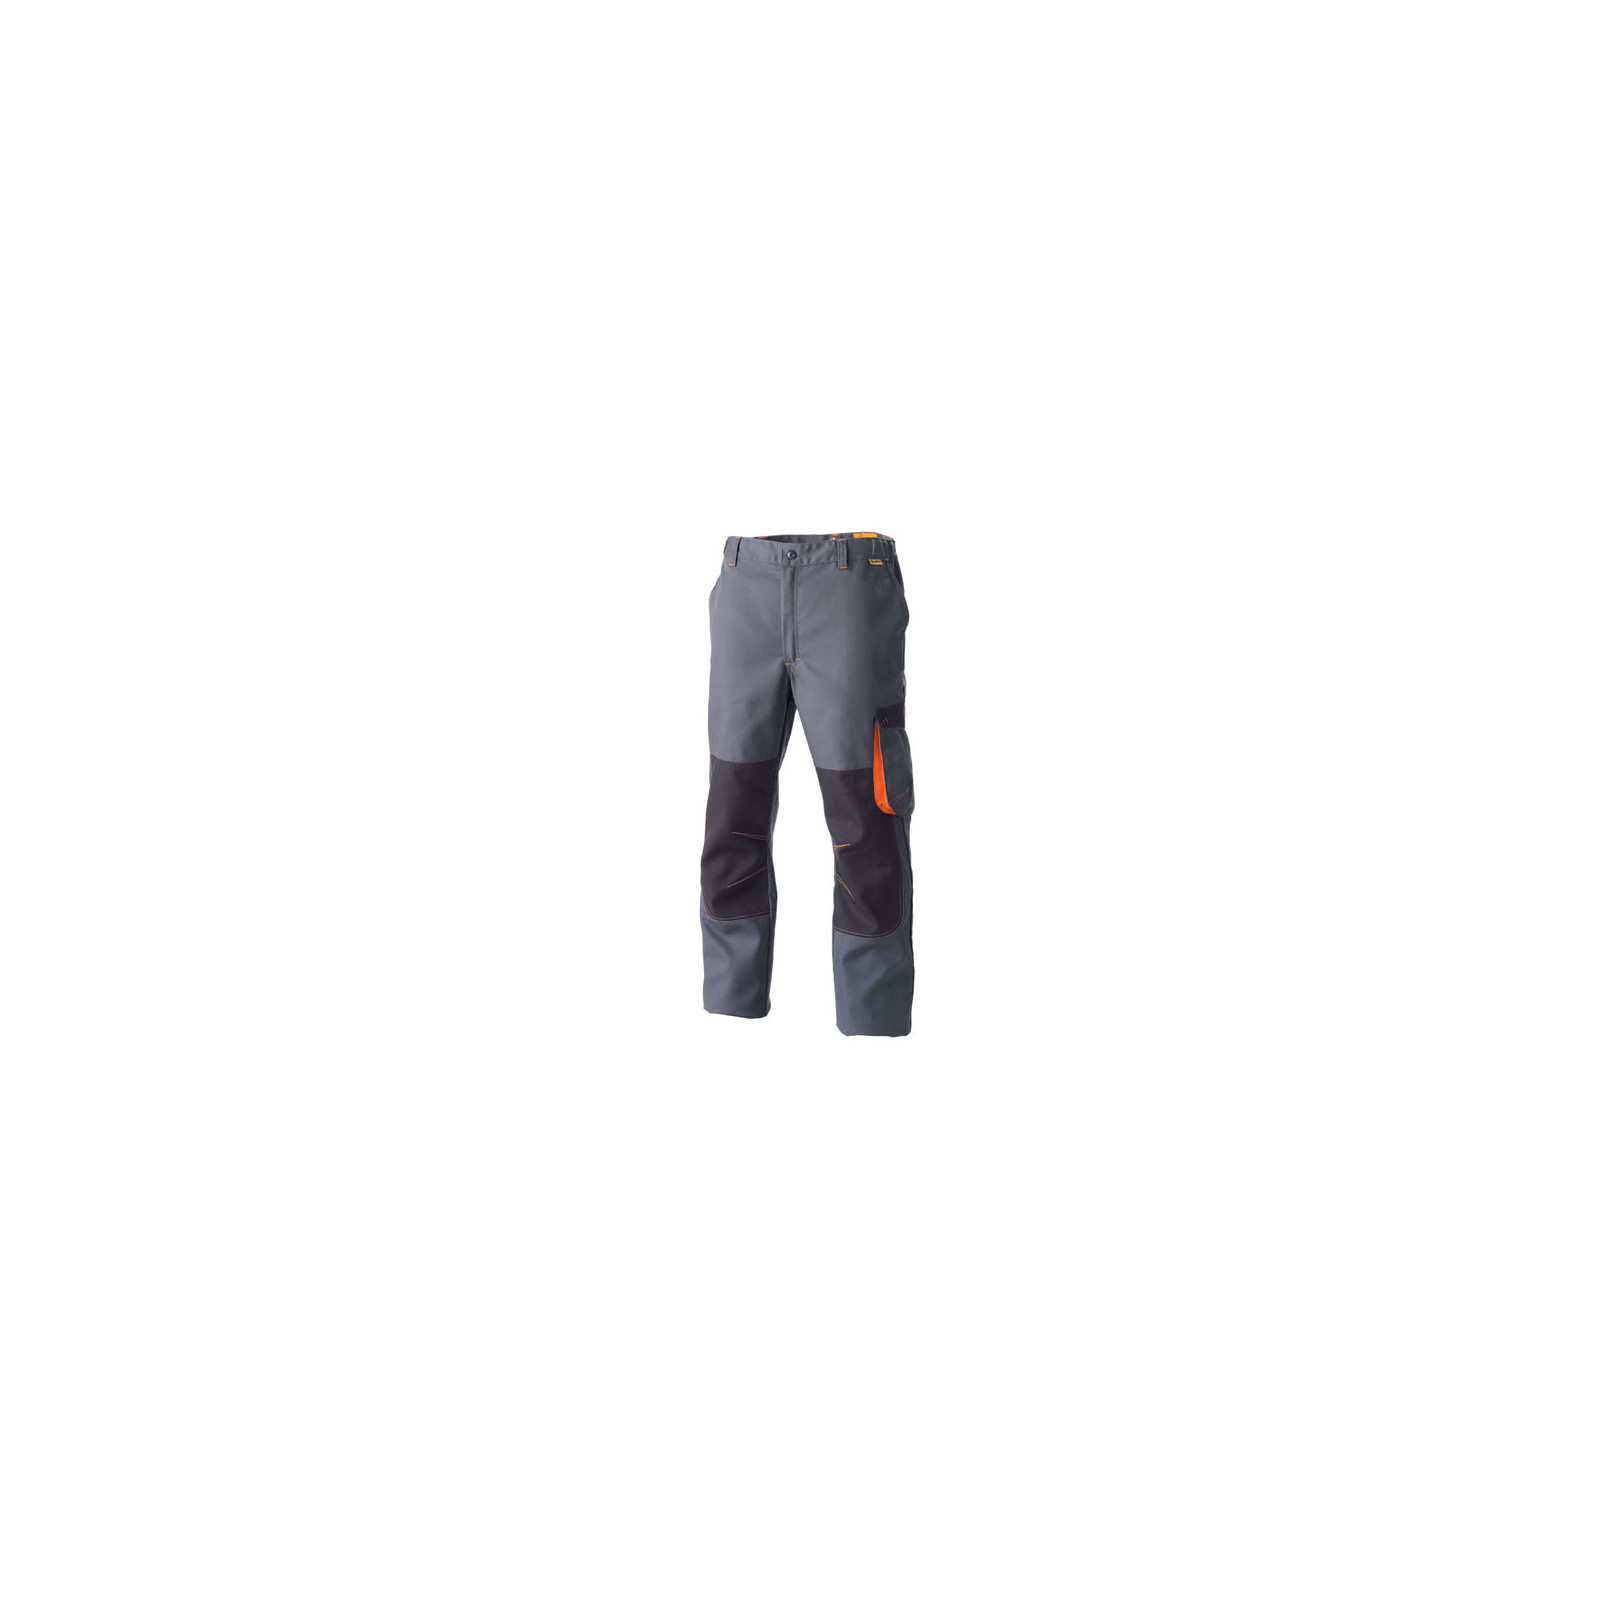 Pantalon de travail G-Rok gris carbone orange polycoton 36/38 - XS